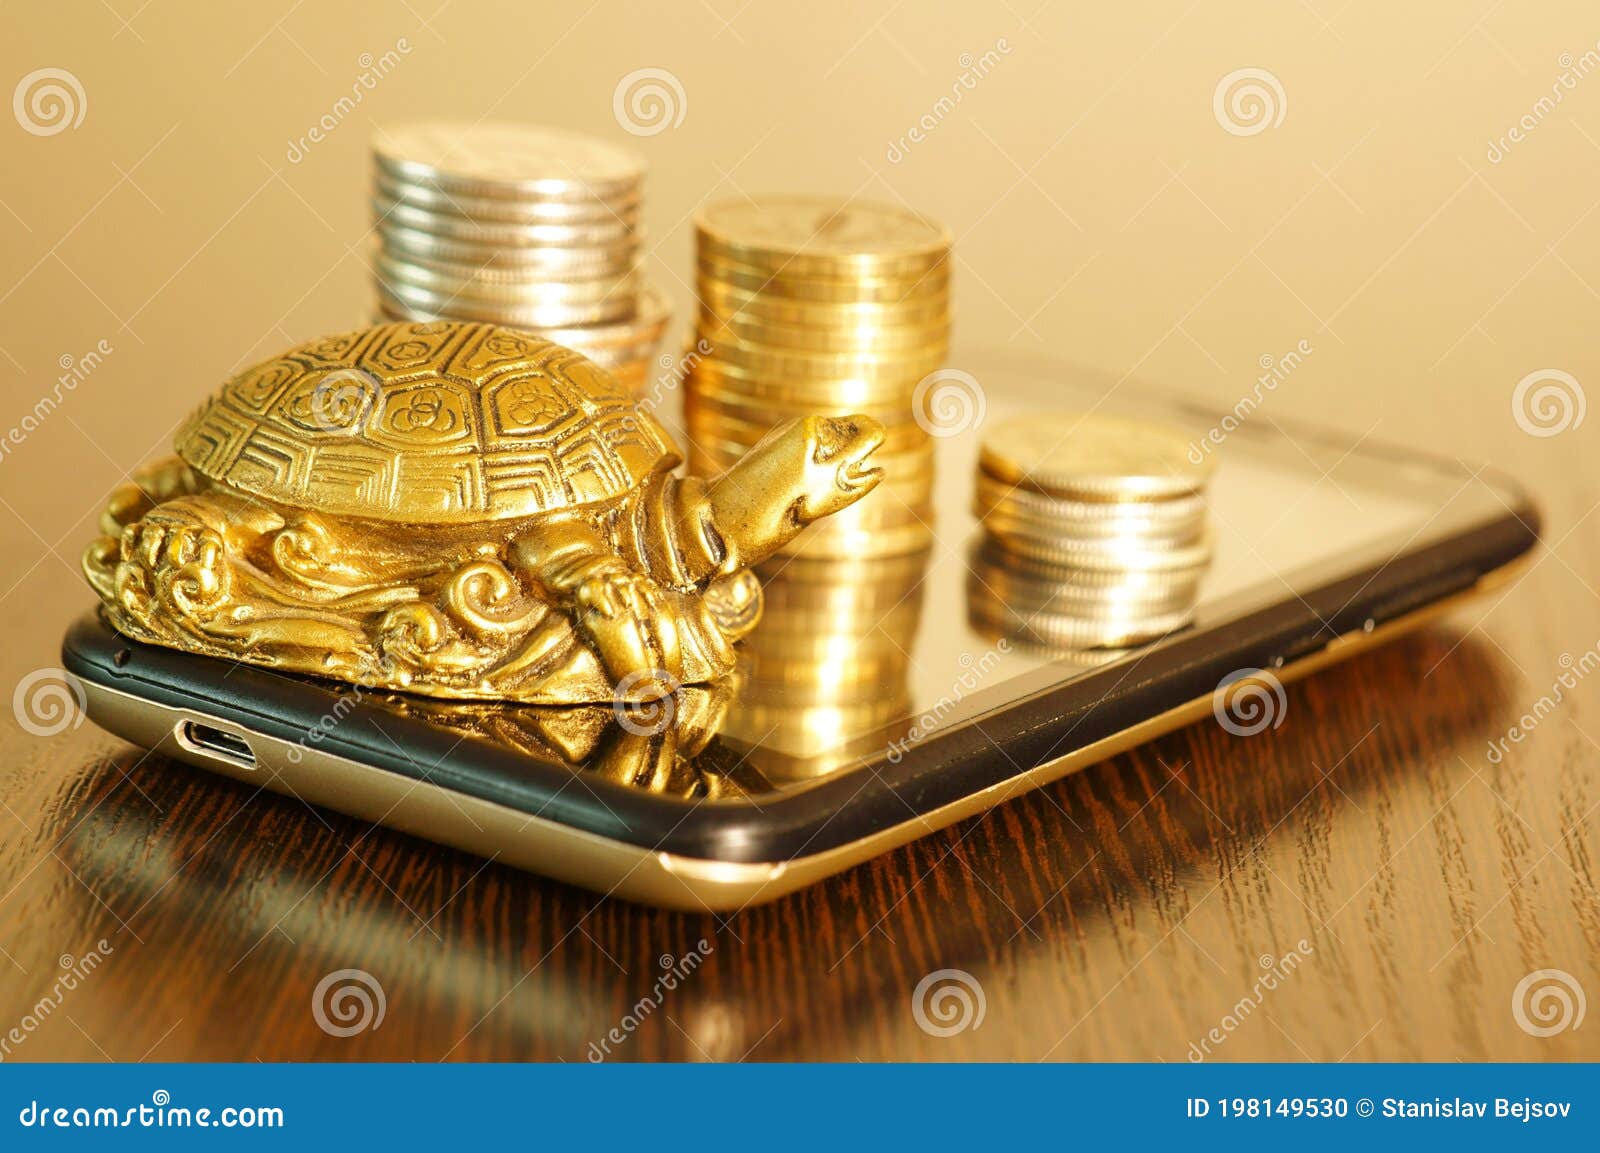 Metal Turtle Figure Bitcoin Coins On Stock Photo | Shutterstock